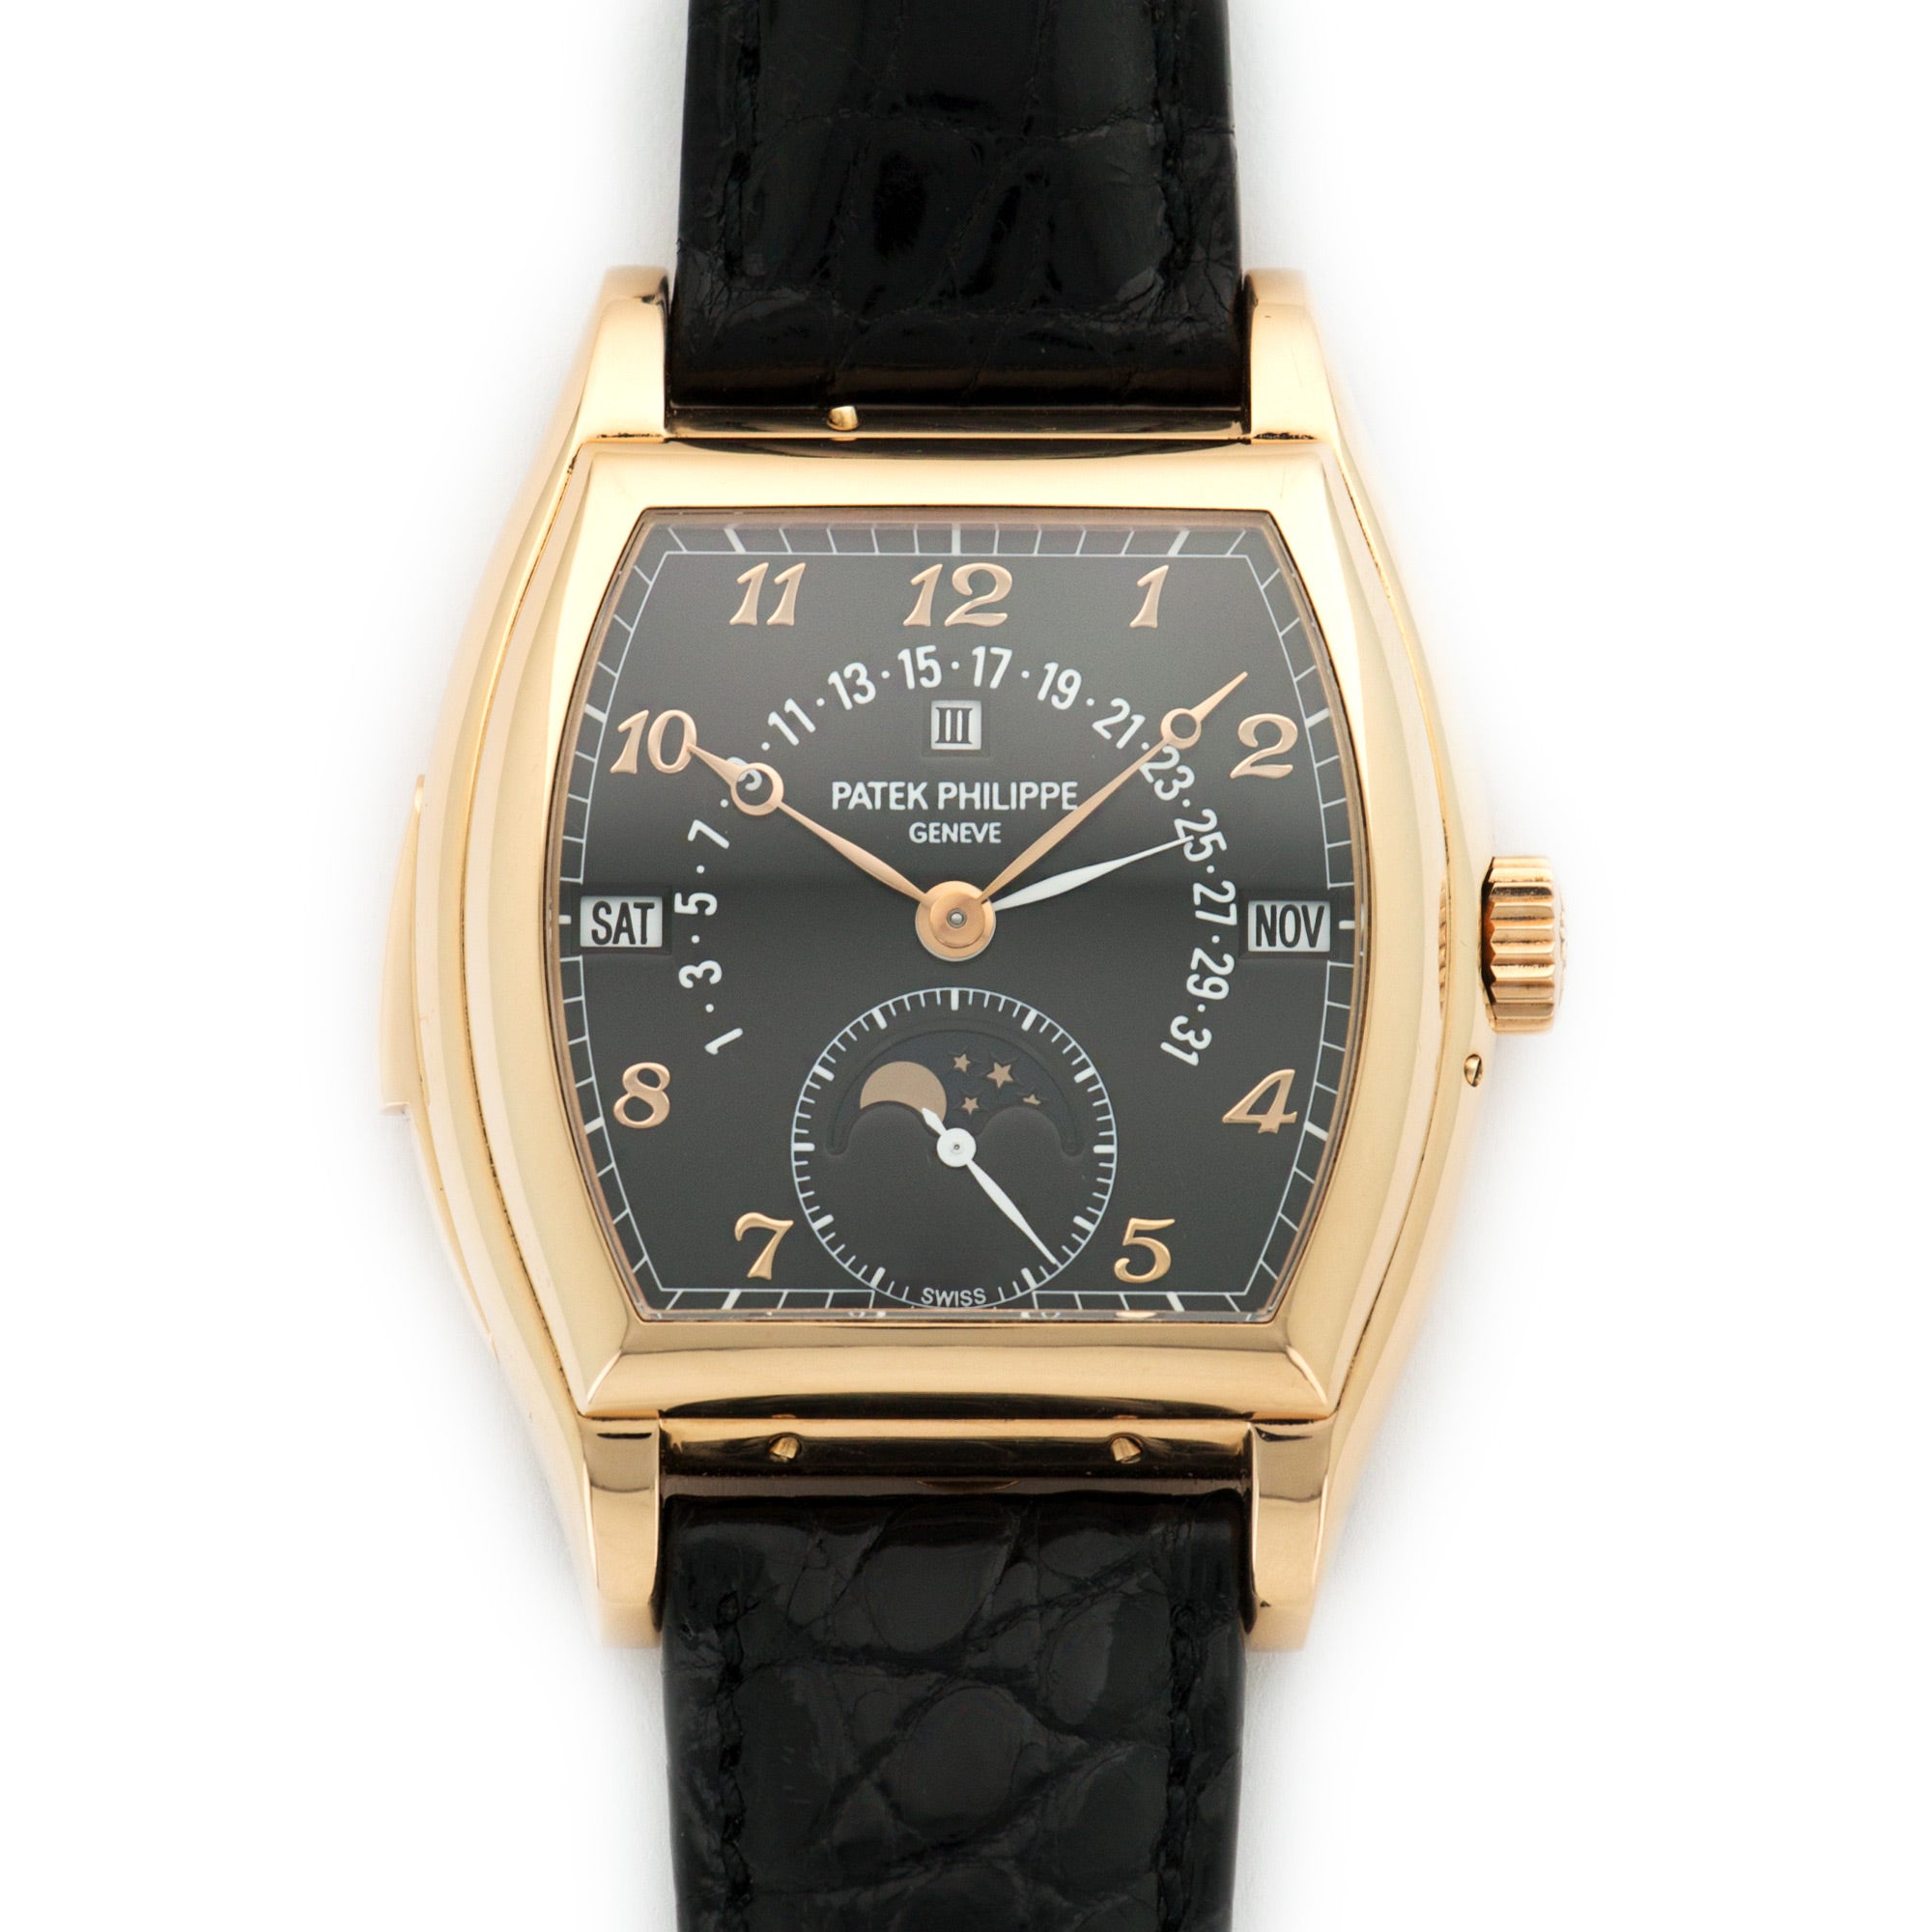 Patek Philippe - Patek Philippe Rose Gold Perpetual Calendar Minute Repeater Watch Ref. 5013 - The Keystone Watches